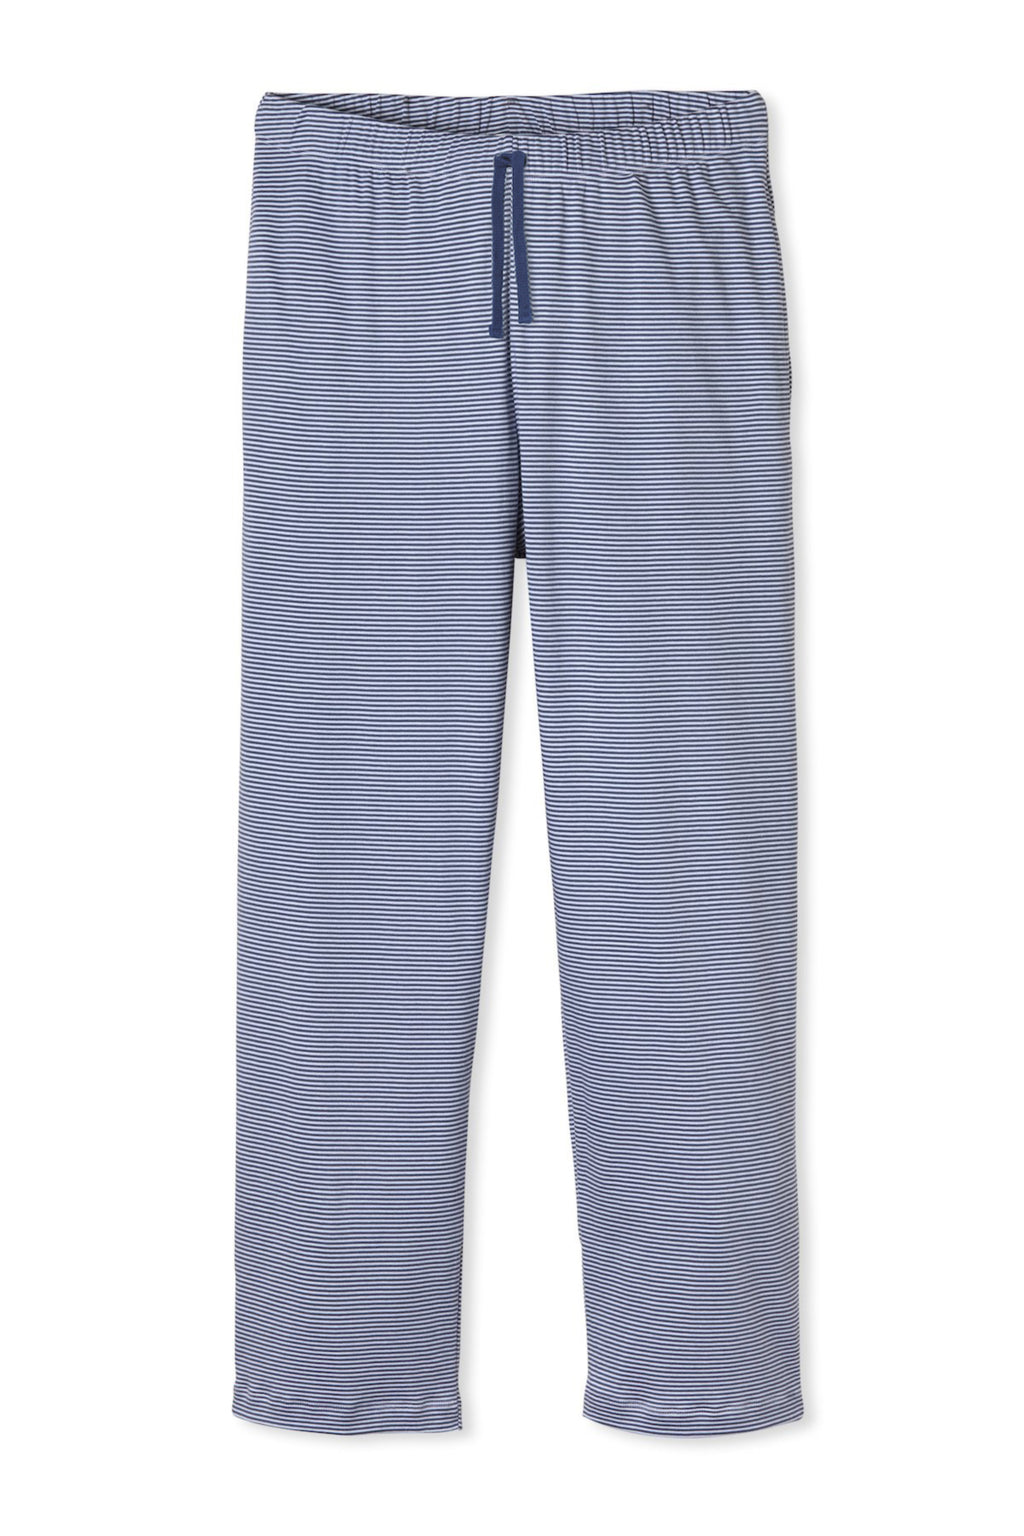 Men's pale blue striped pyjama shorts